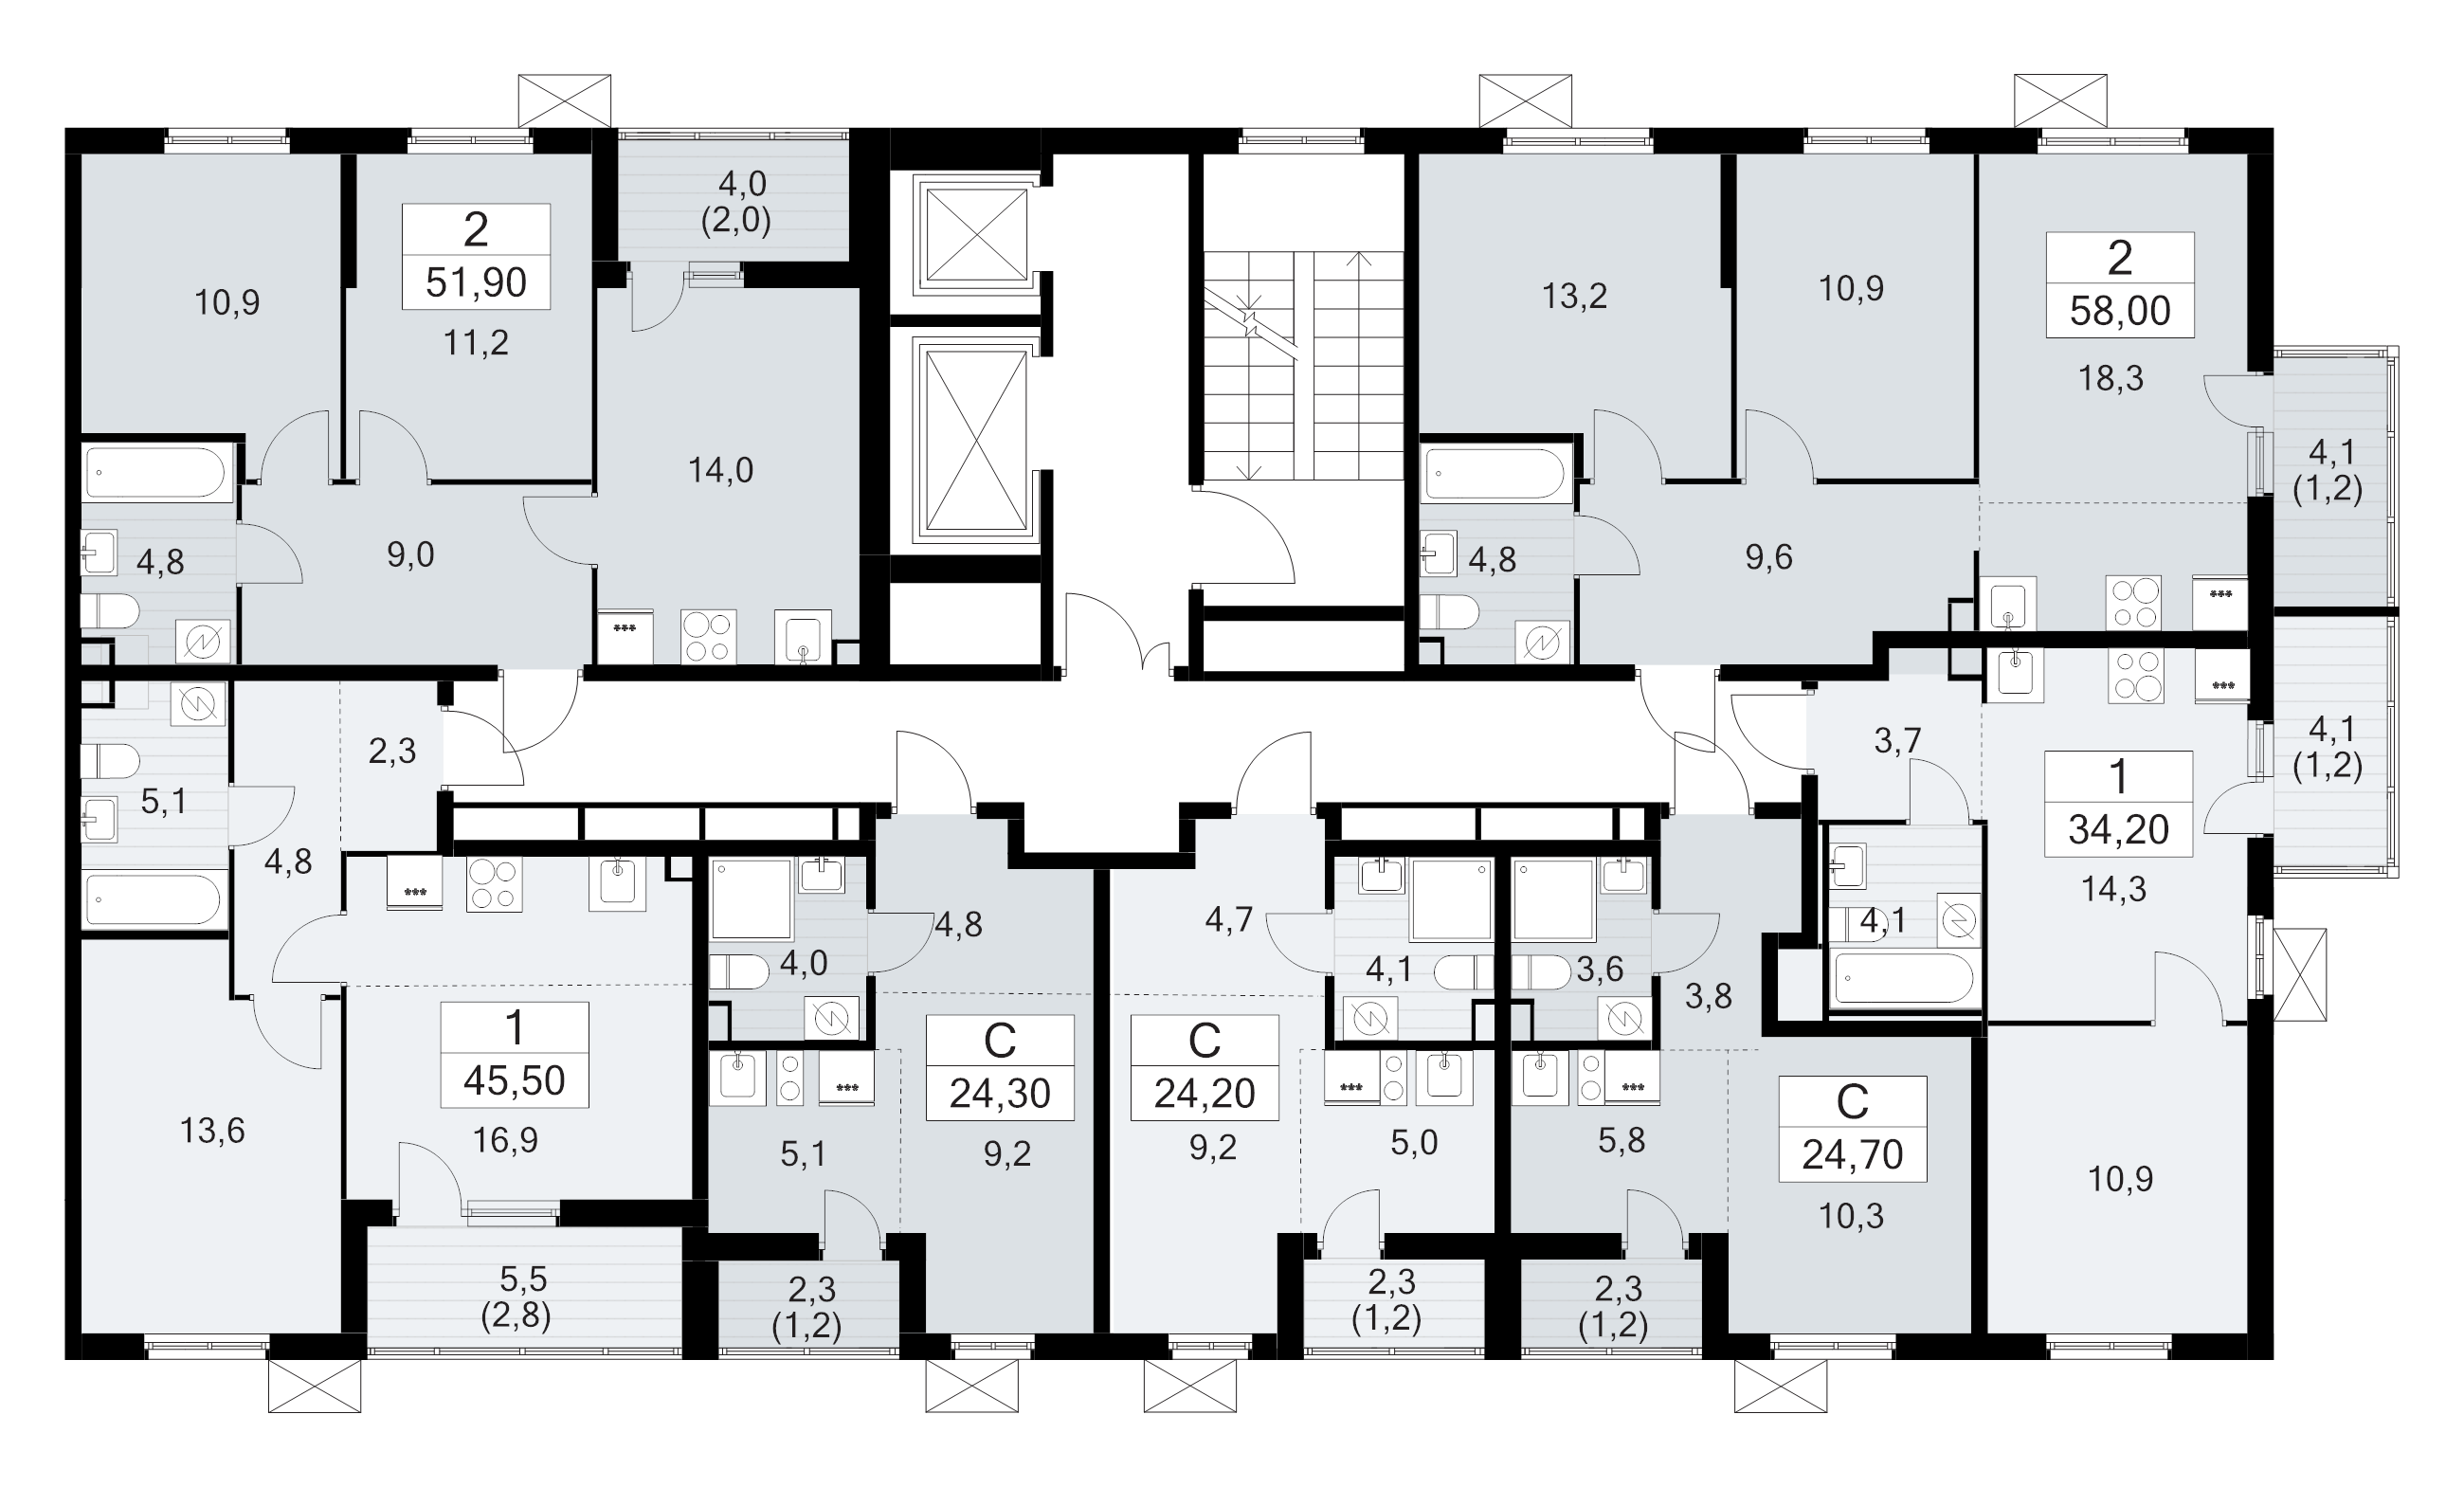 2-комнатная (Евро) квартира, 34.2 м² - планировка этажа